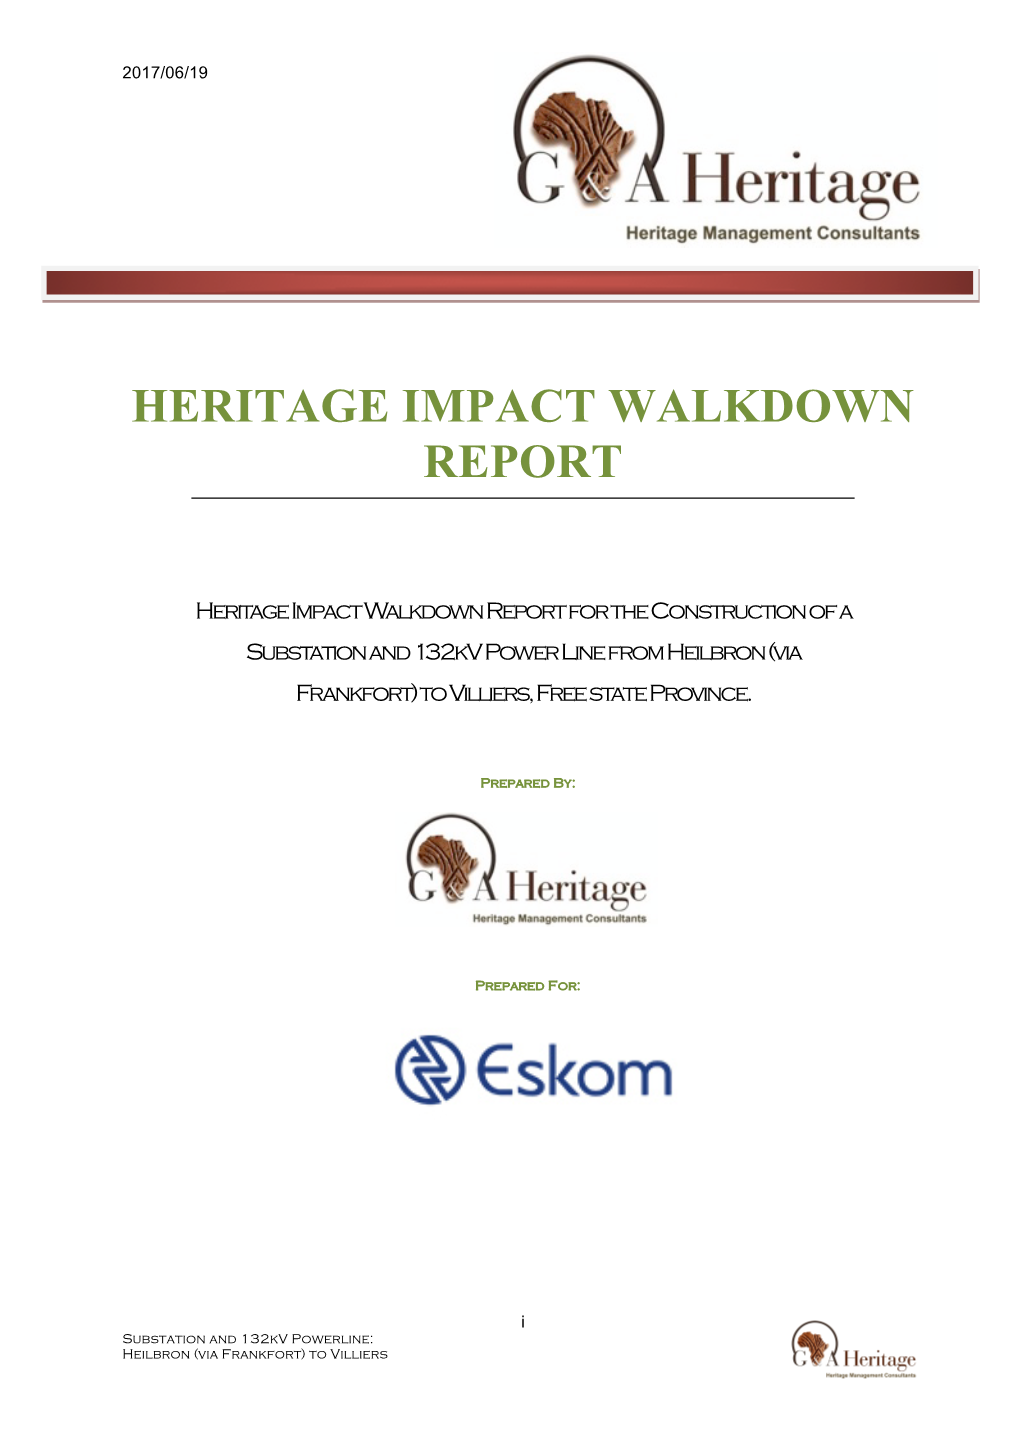 Heritage Impact Walkdown Report